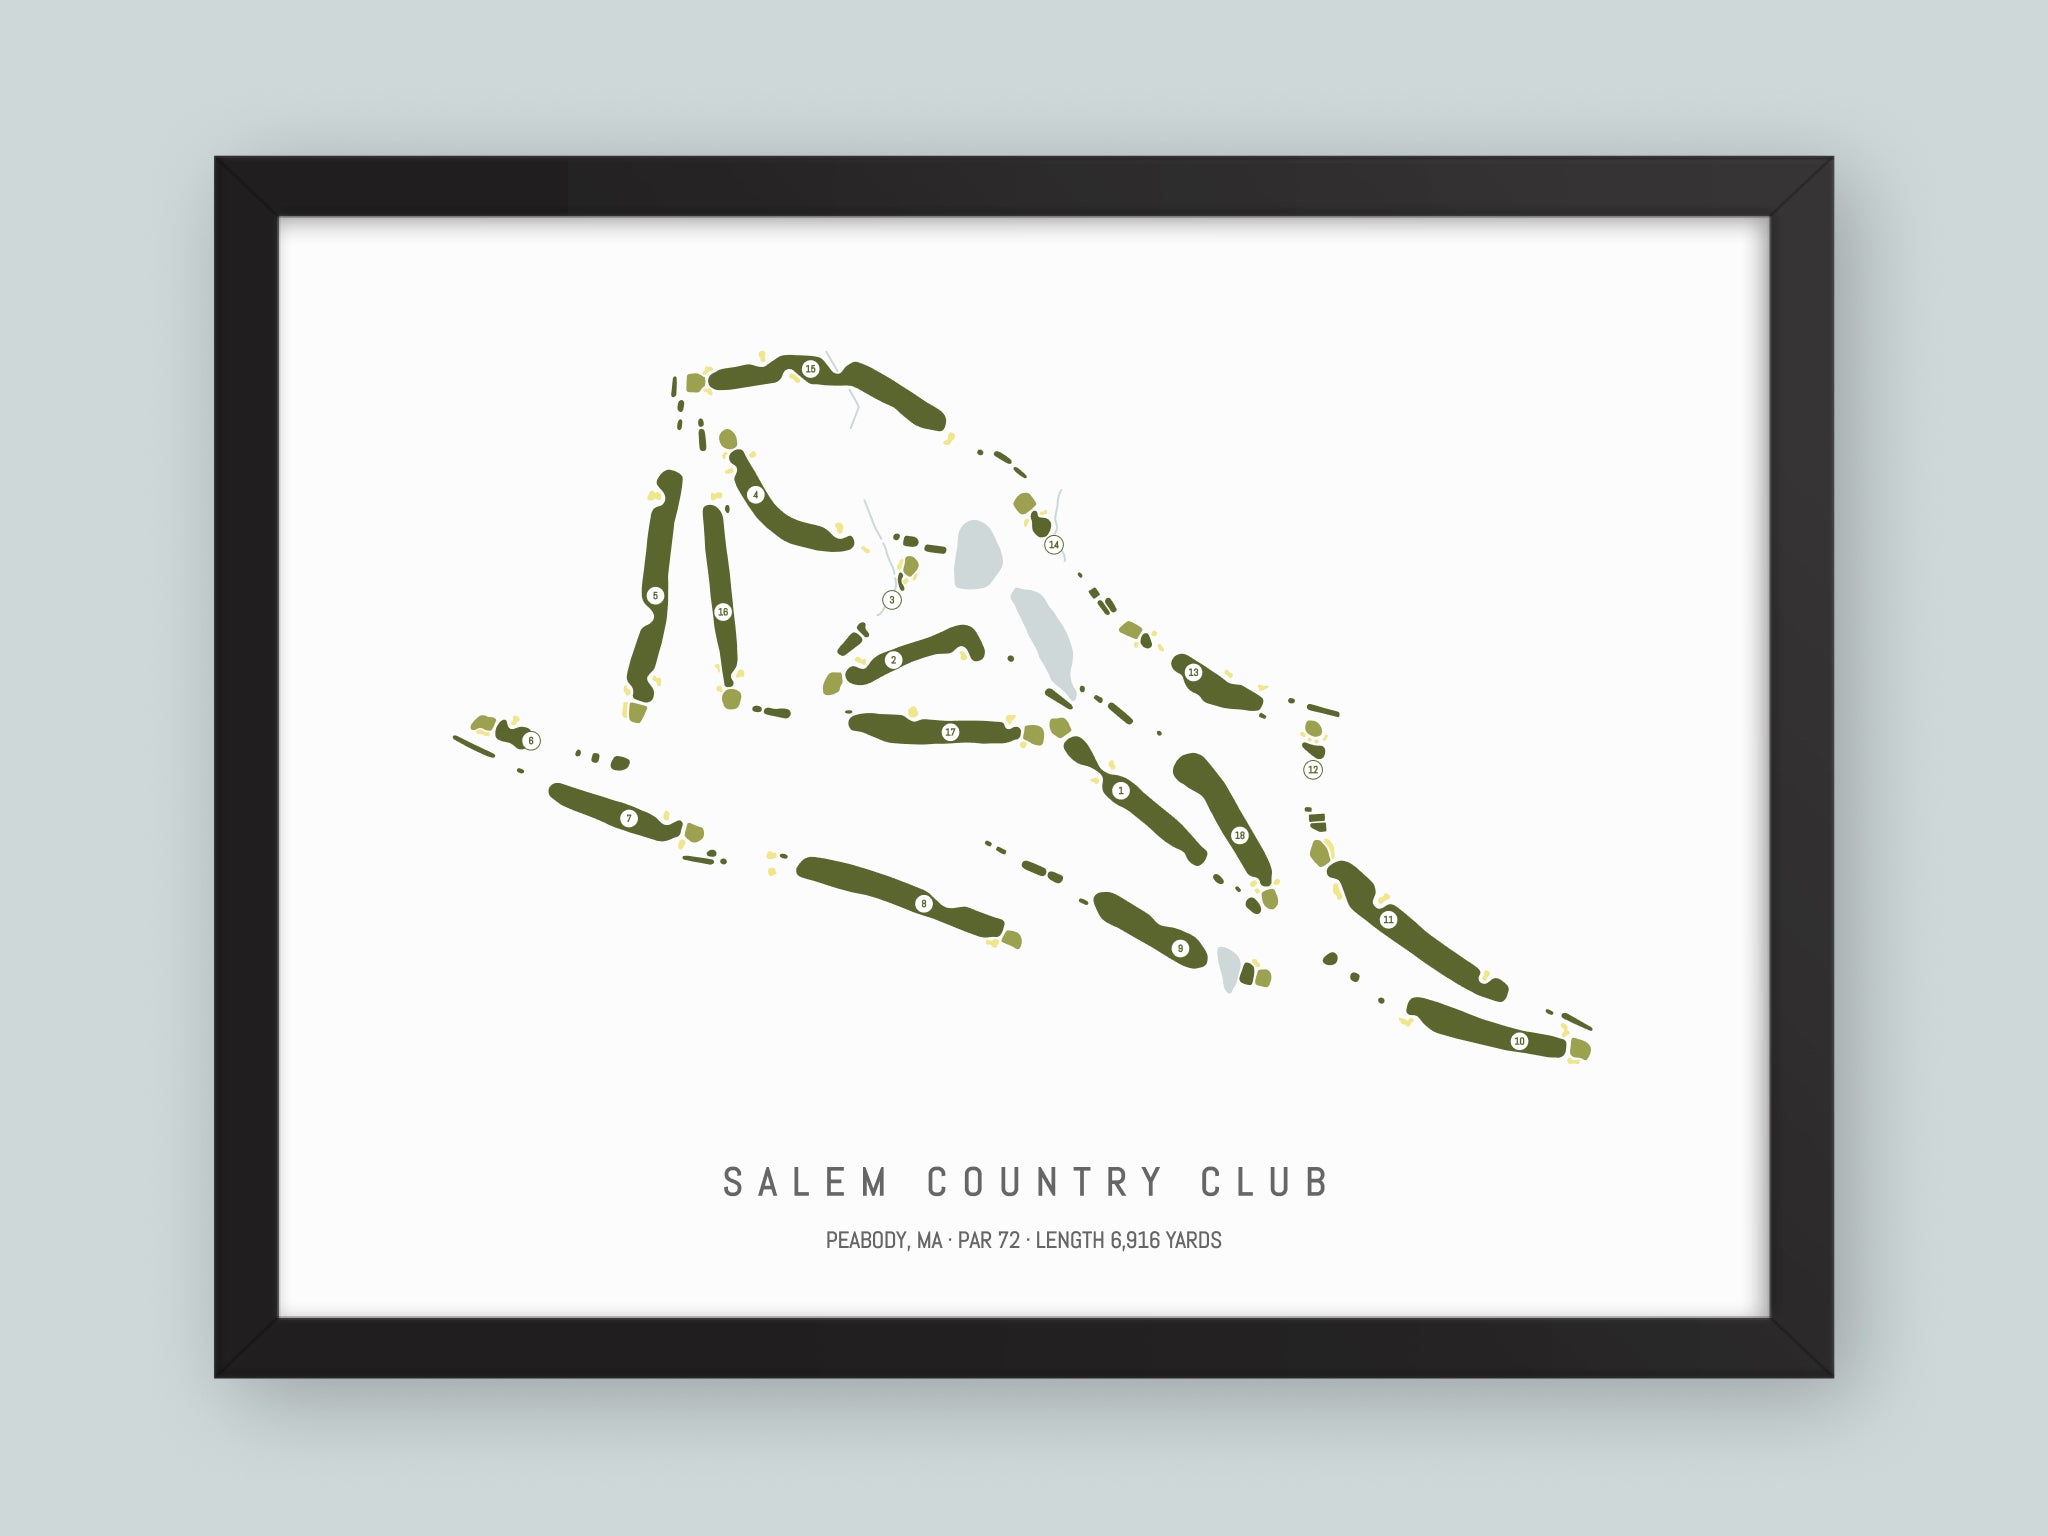 Salem-Country-Club-MA--Black-Frame-24x18-With-Hole-Numbers